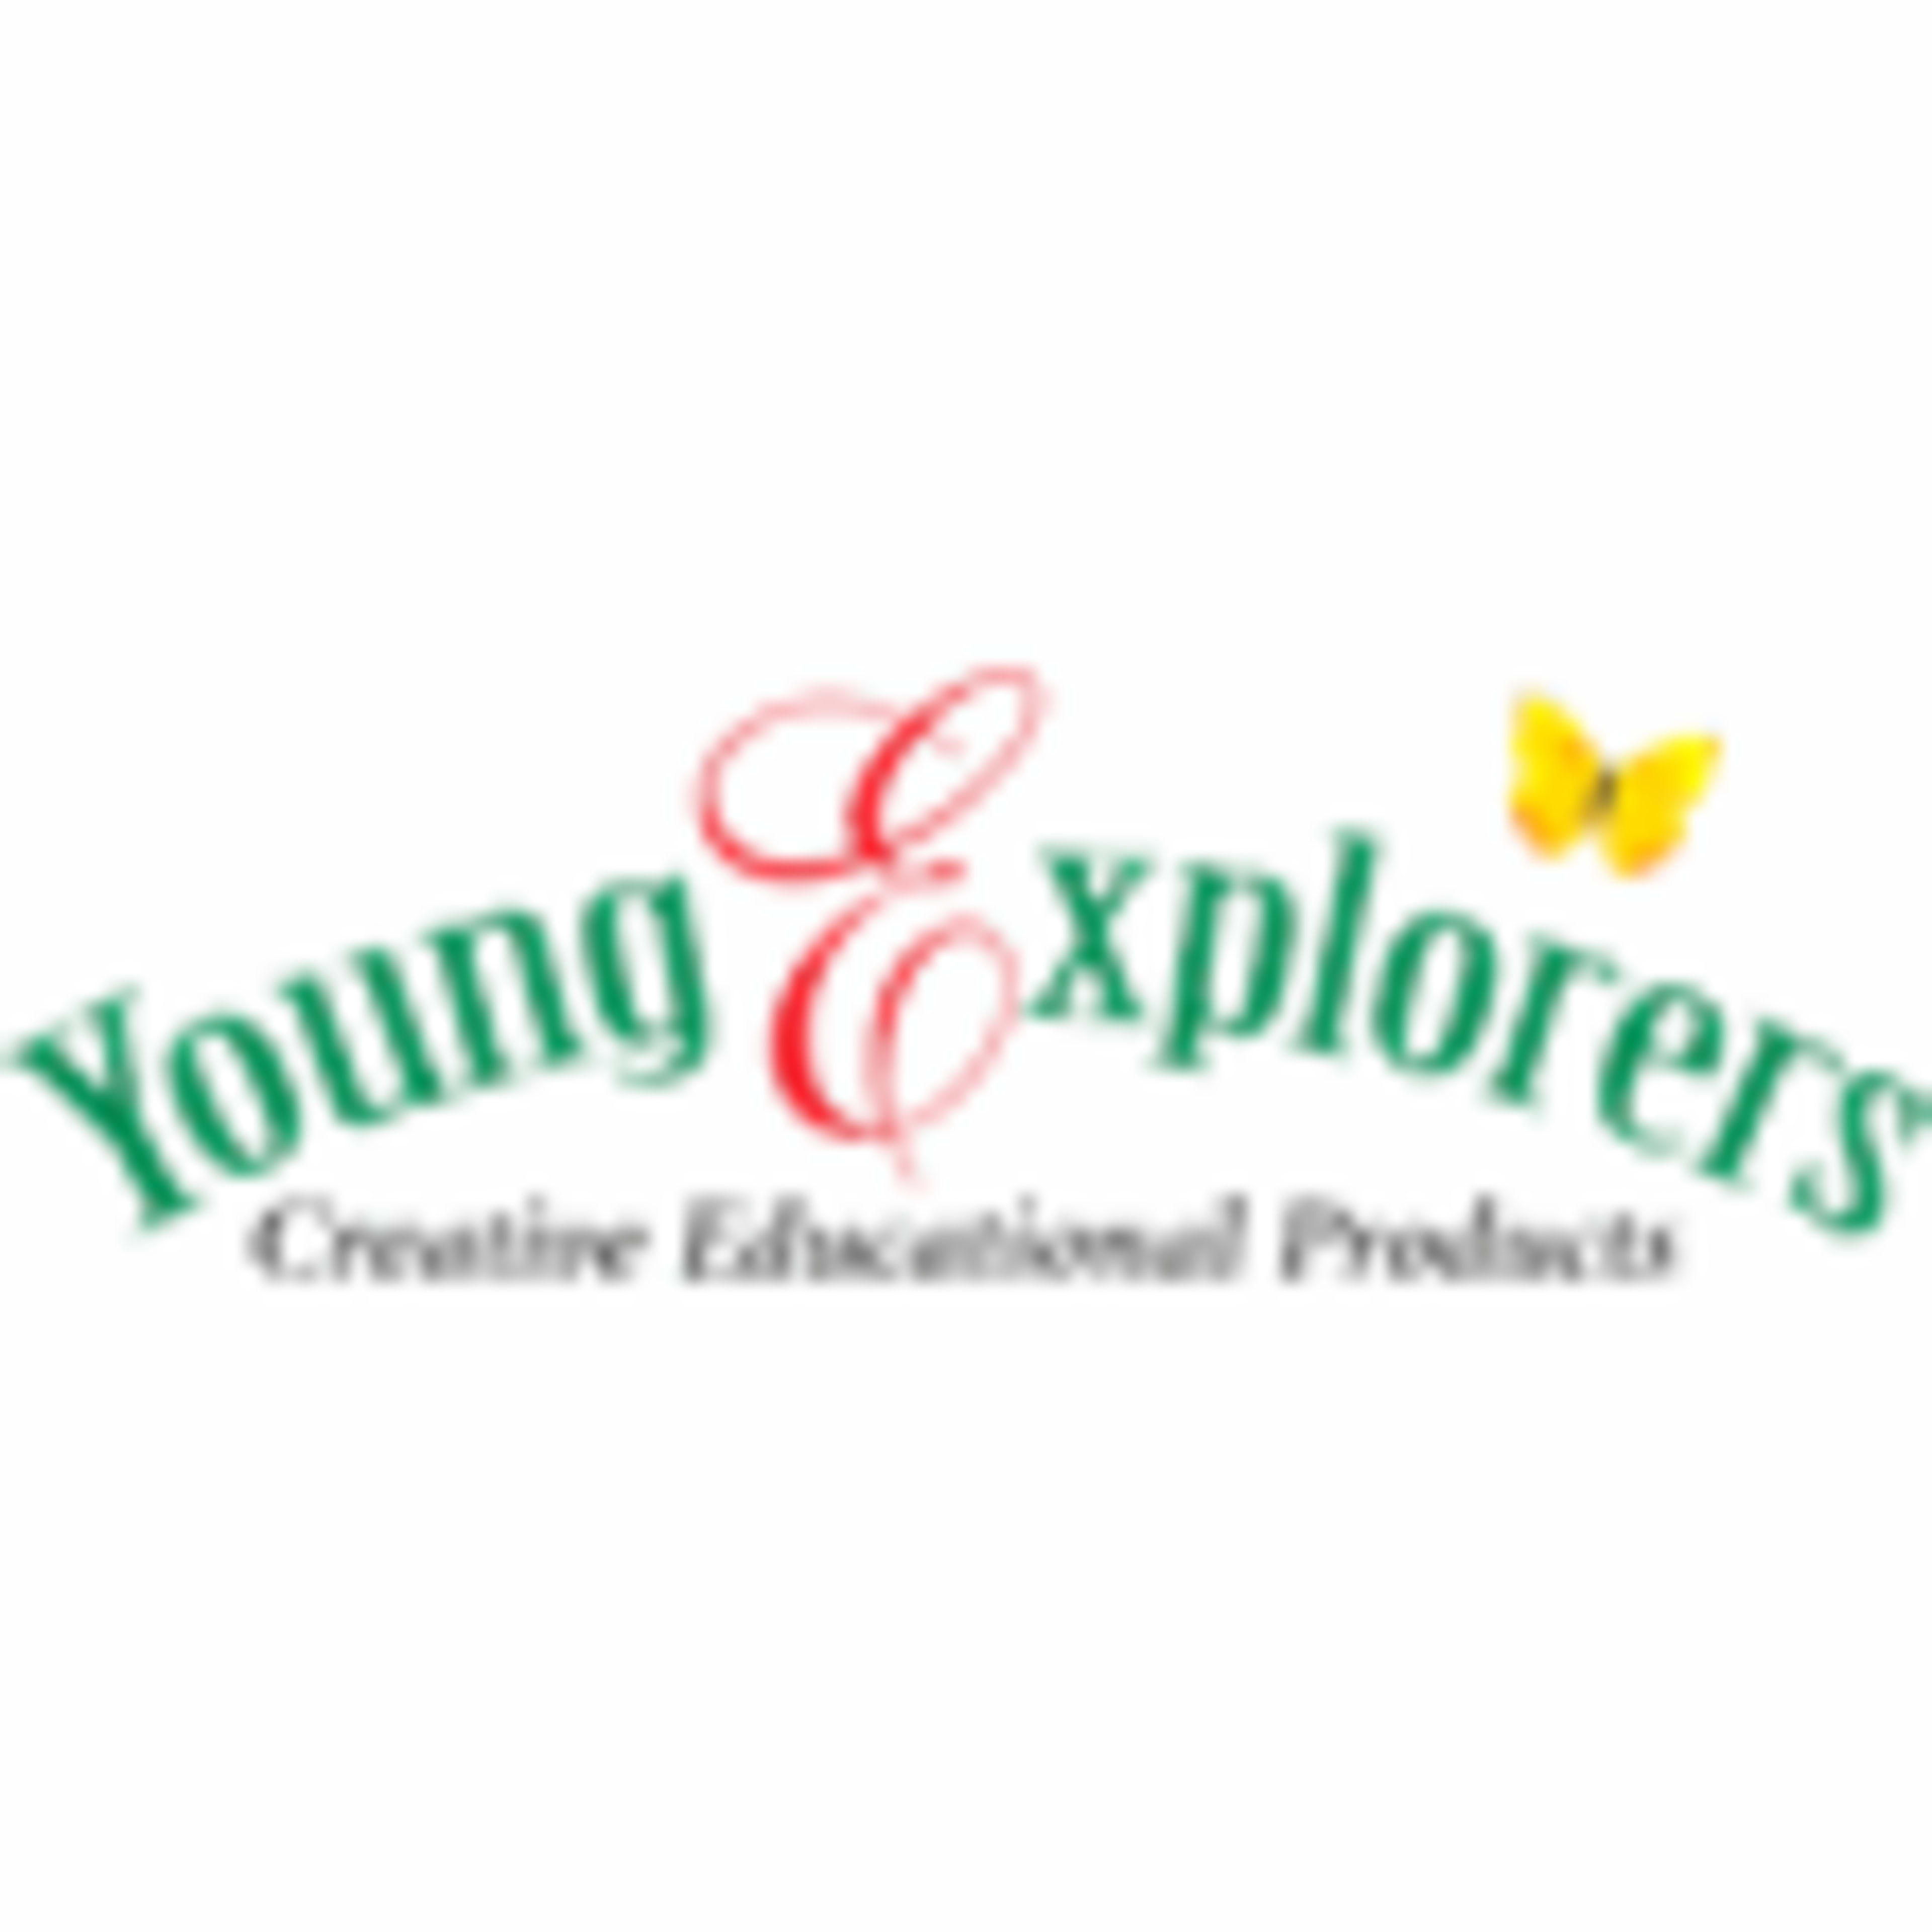 Young Explorers Code